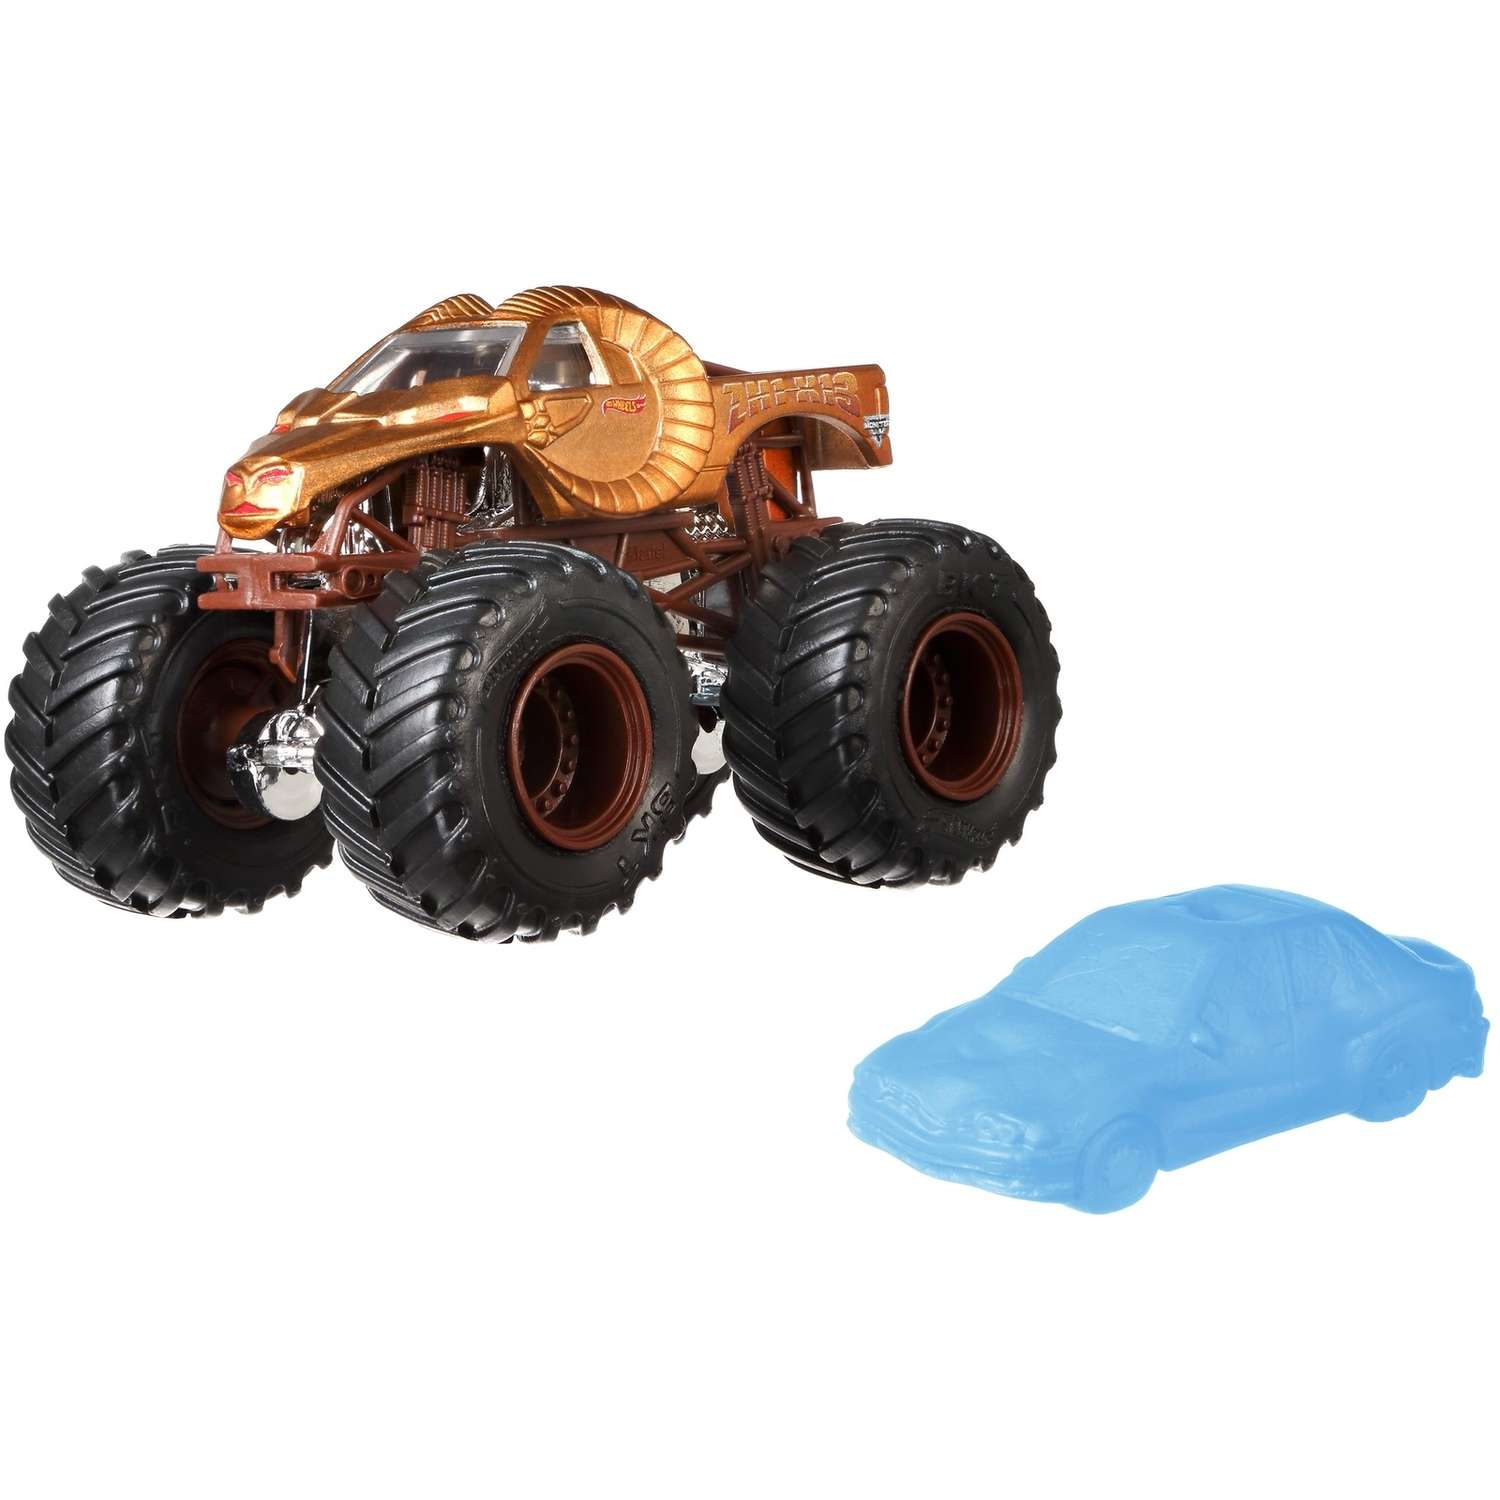 Машина Hot Wheels Monster Jam 1:64 Chroma Frost Зомби Хантер FLX32 21572 - фото 1